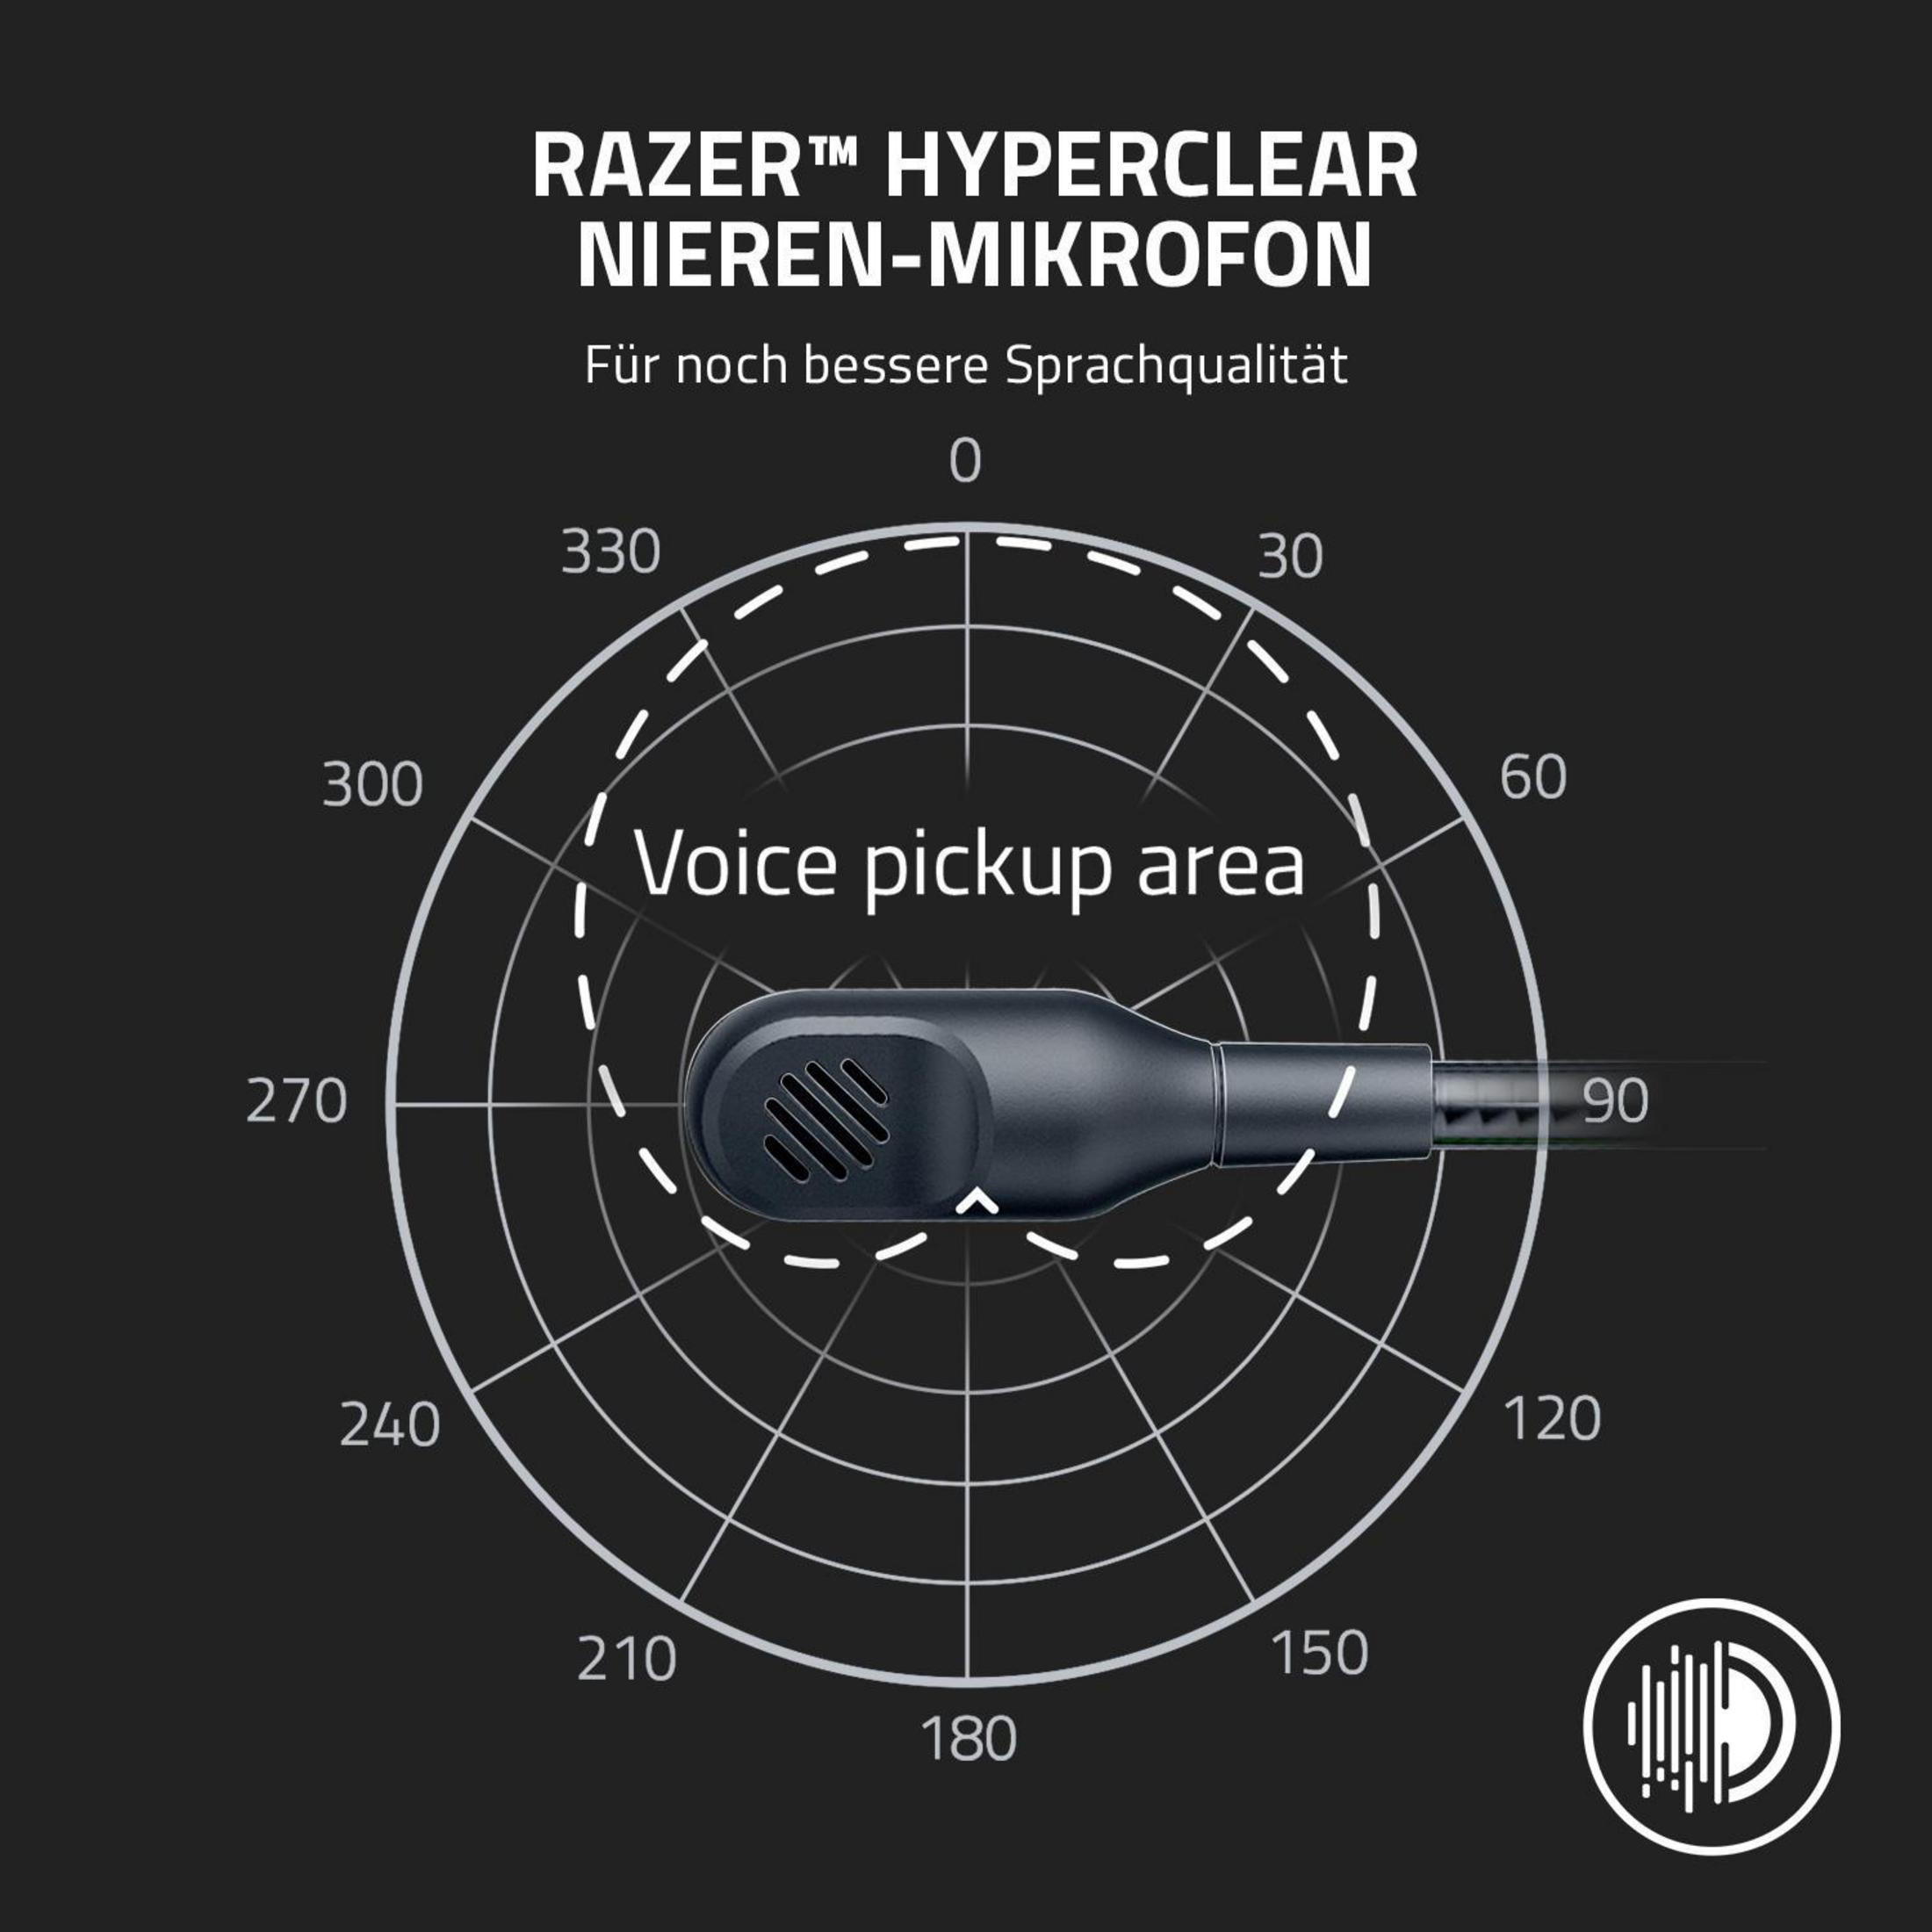 Weiß BLACKSHARK Gaming RAZER Headset WHITE, RZ04-03240700-R3M1 X V2 In-ear